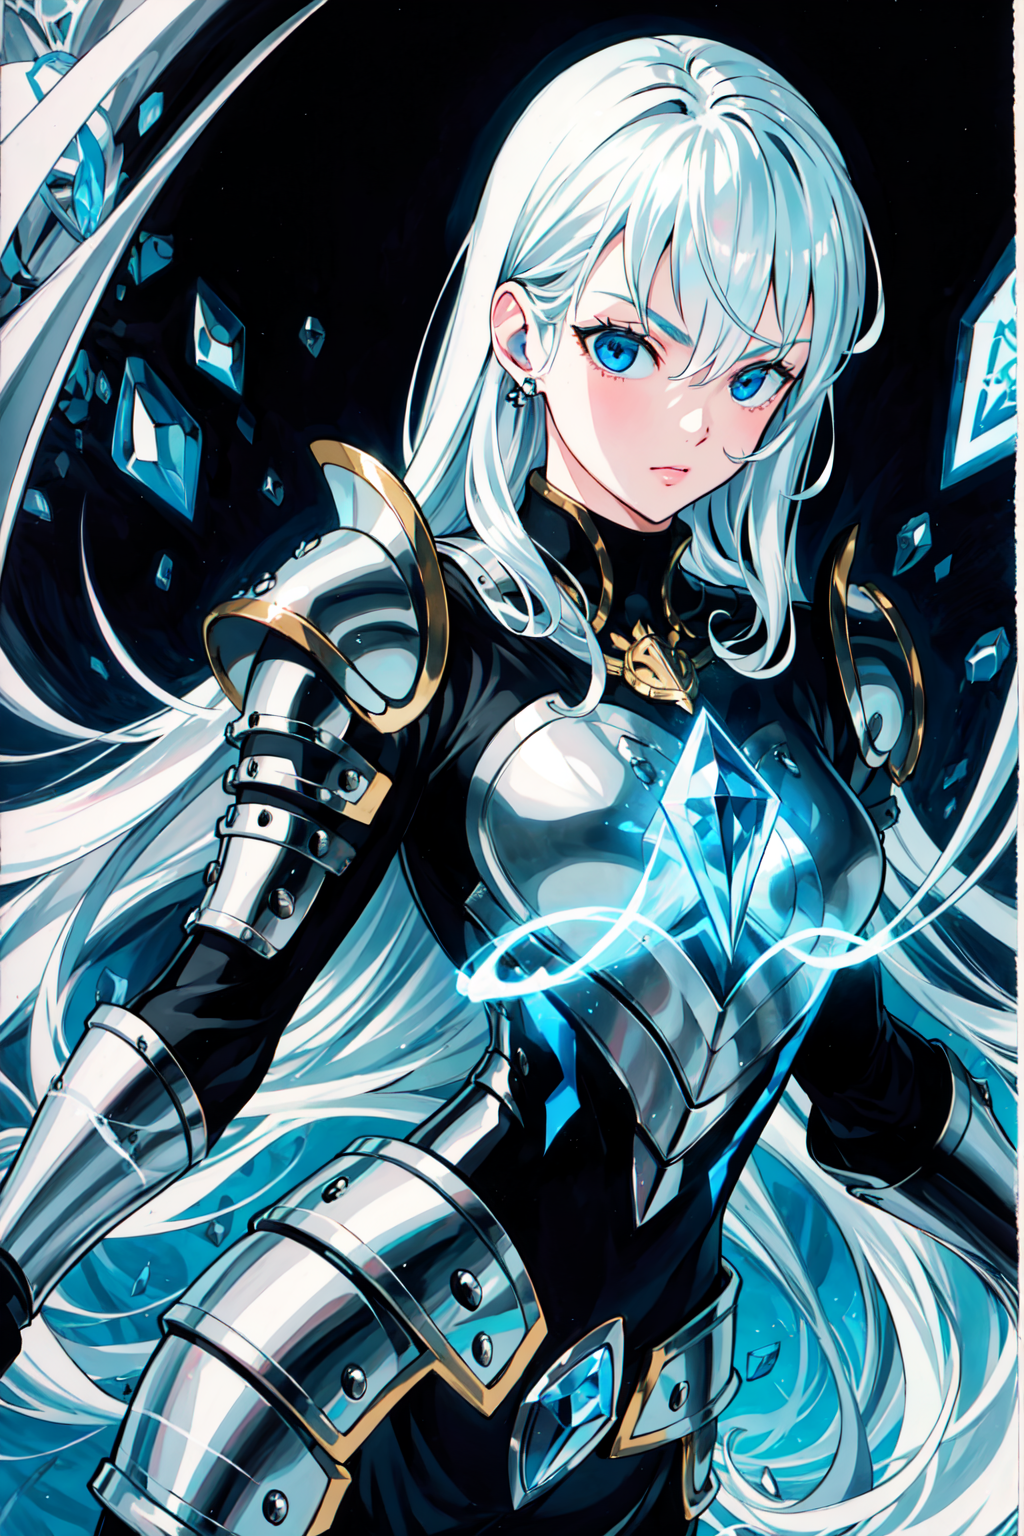 anime female knight armor